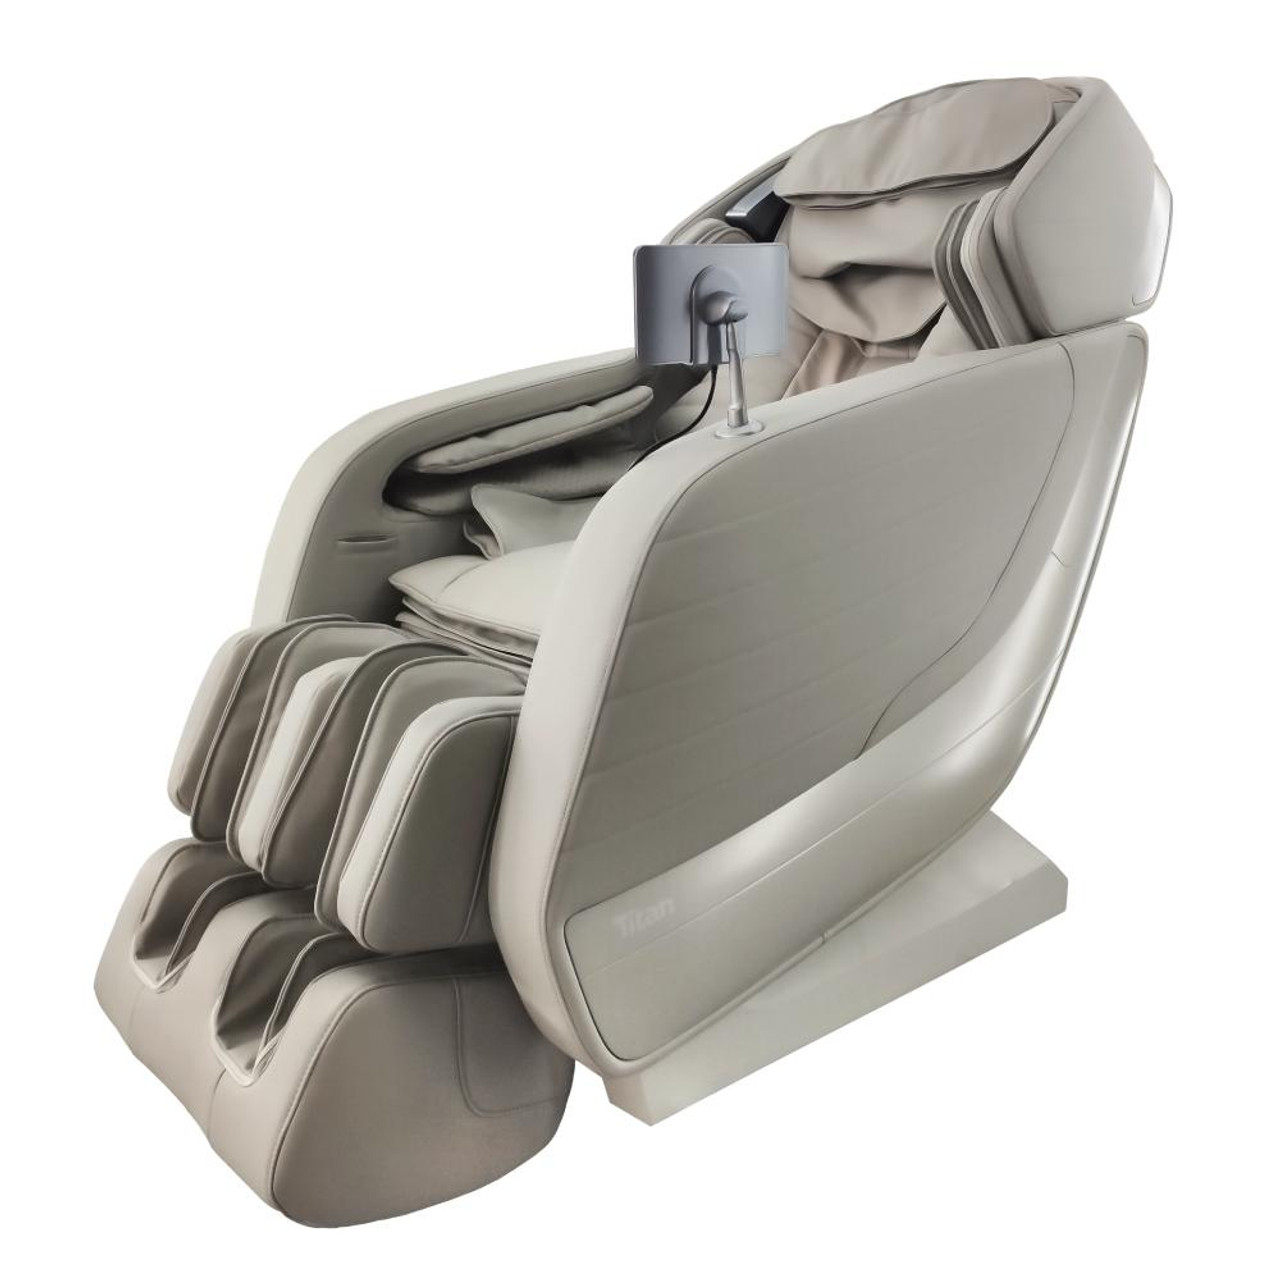 Jupiter LE Premium Massage Chair by Titan